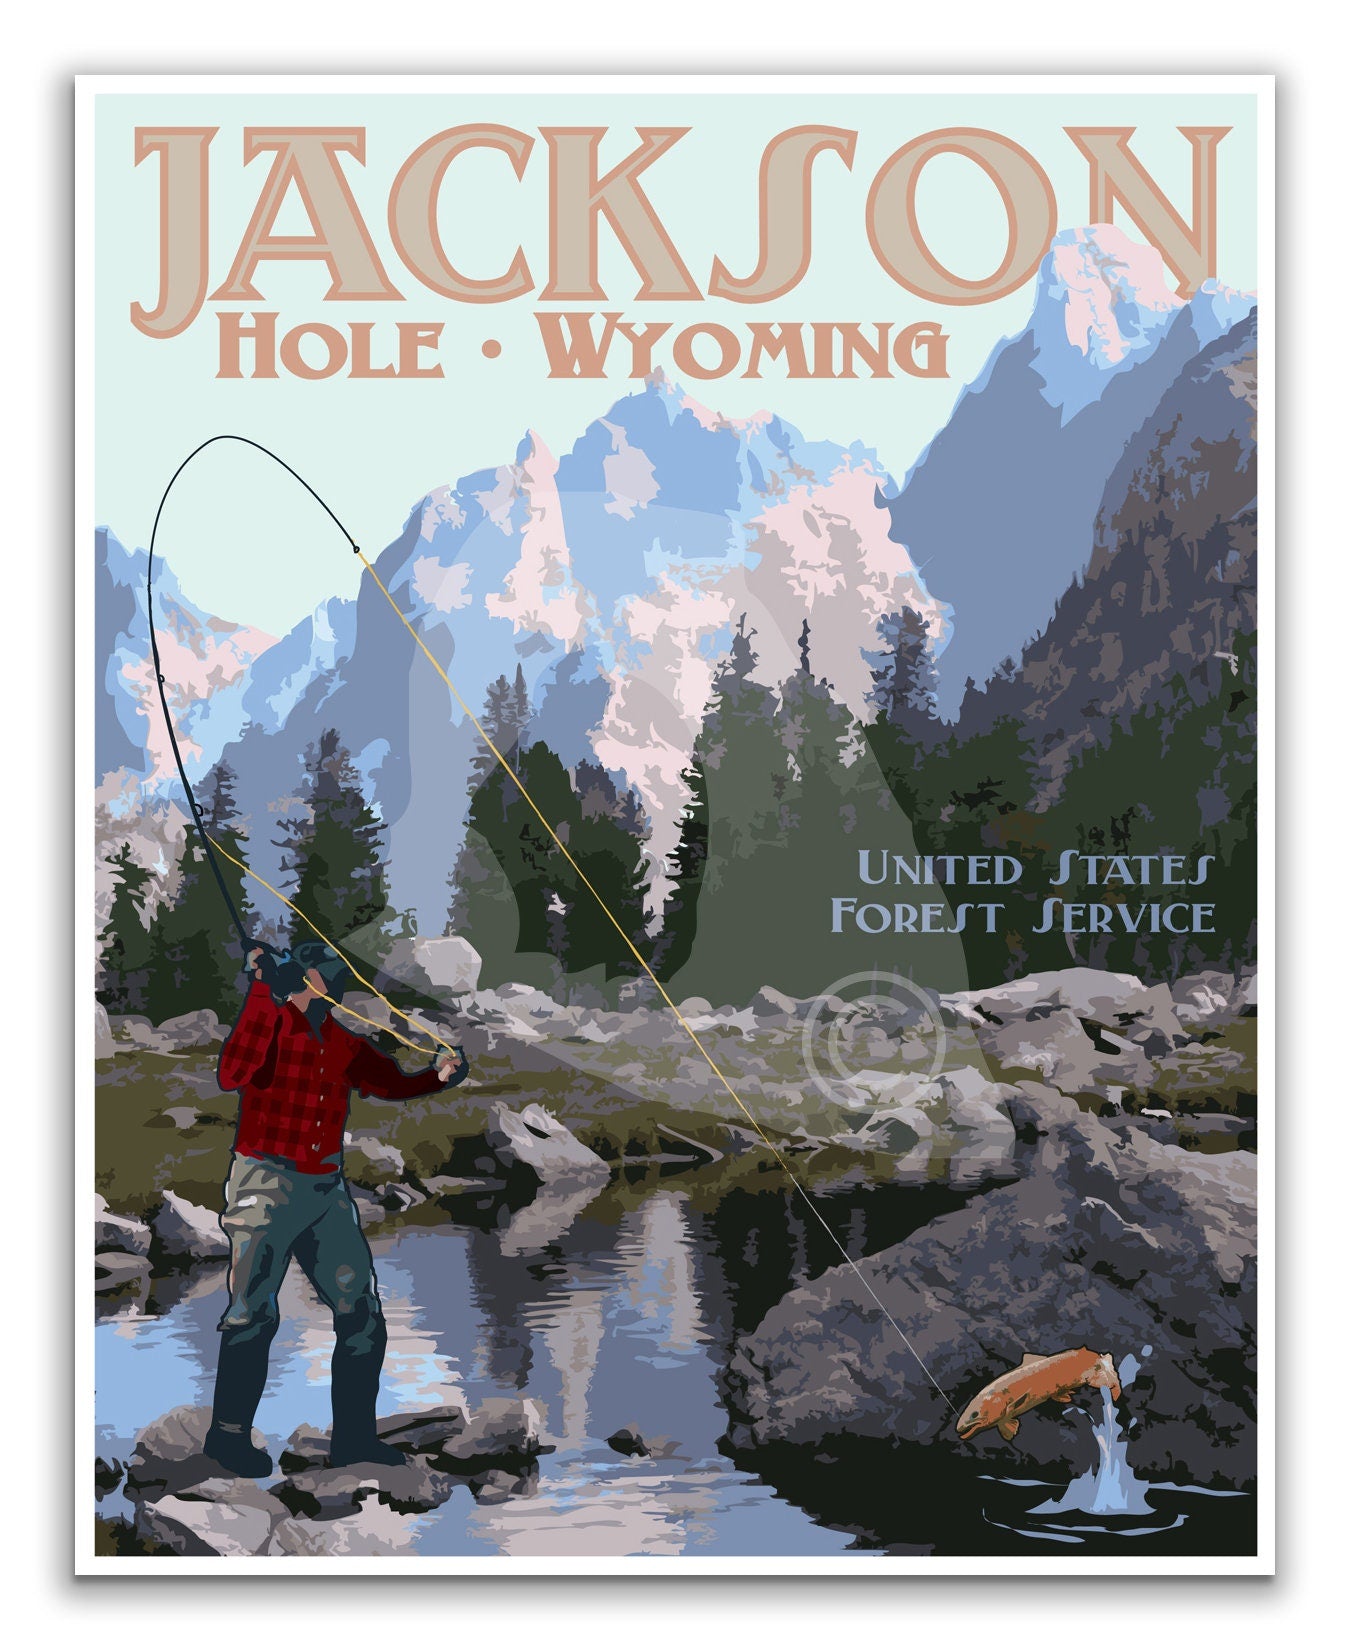 Wyoming Print Set, Grand Teton National Park Poster, Jackson Hole Wyoming Poster, Yellowstone National Park Poster, Three Print Value Set